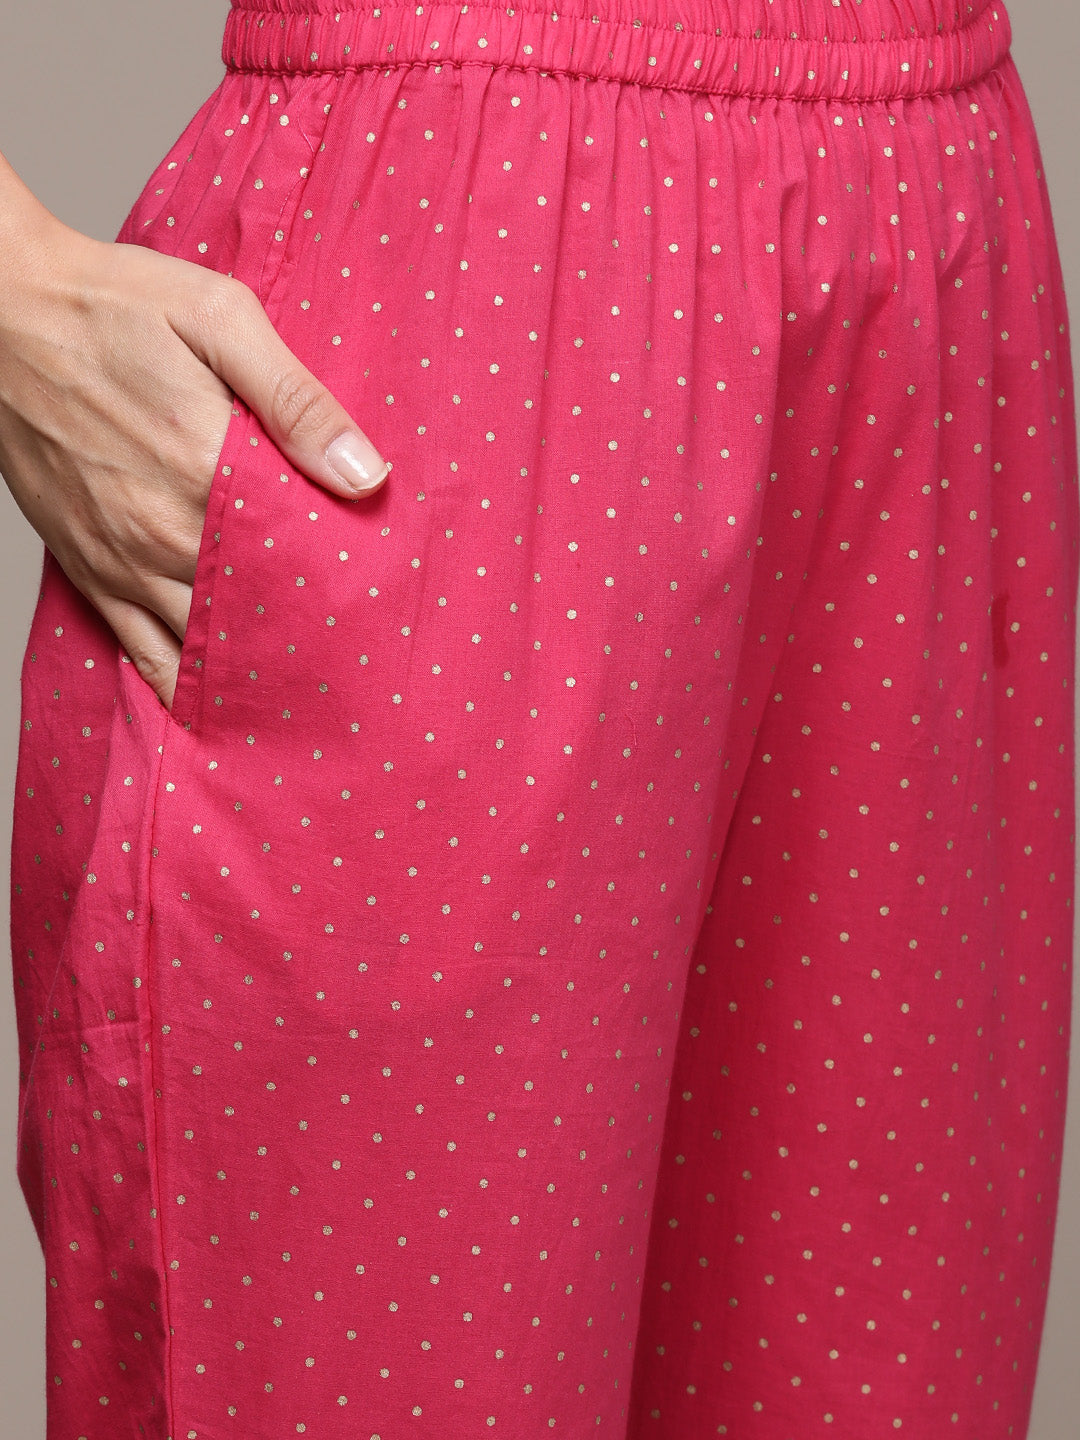 Women's Pink Gotawork Printed Kurta set with Trousers and Dupatta